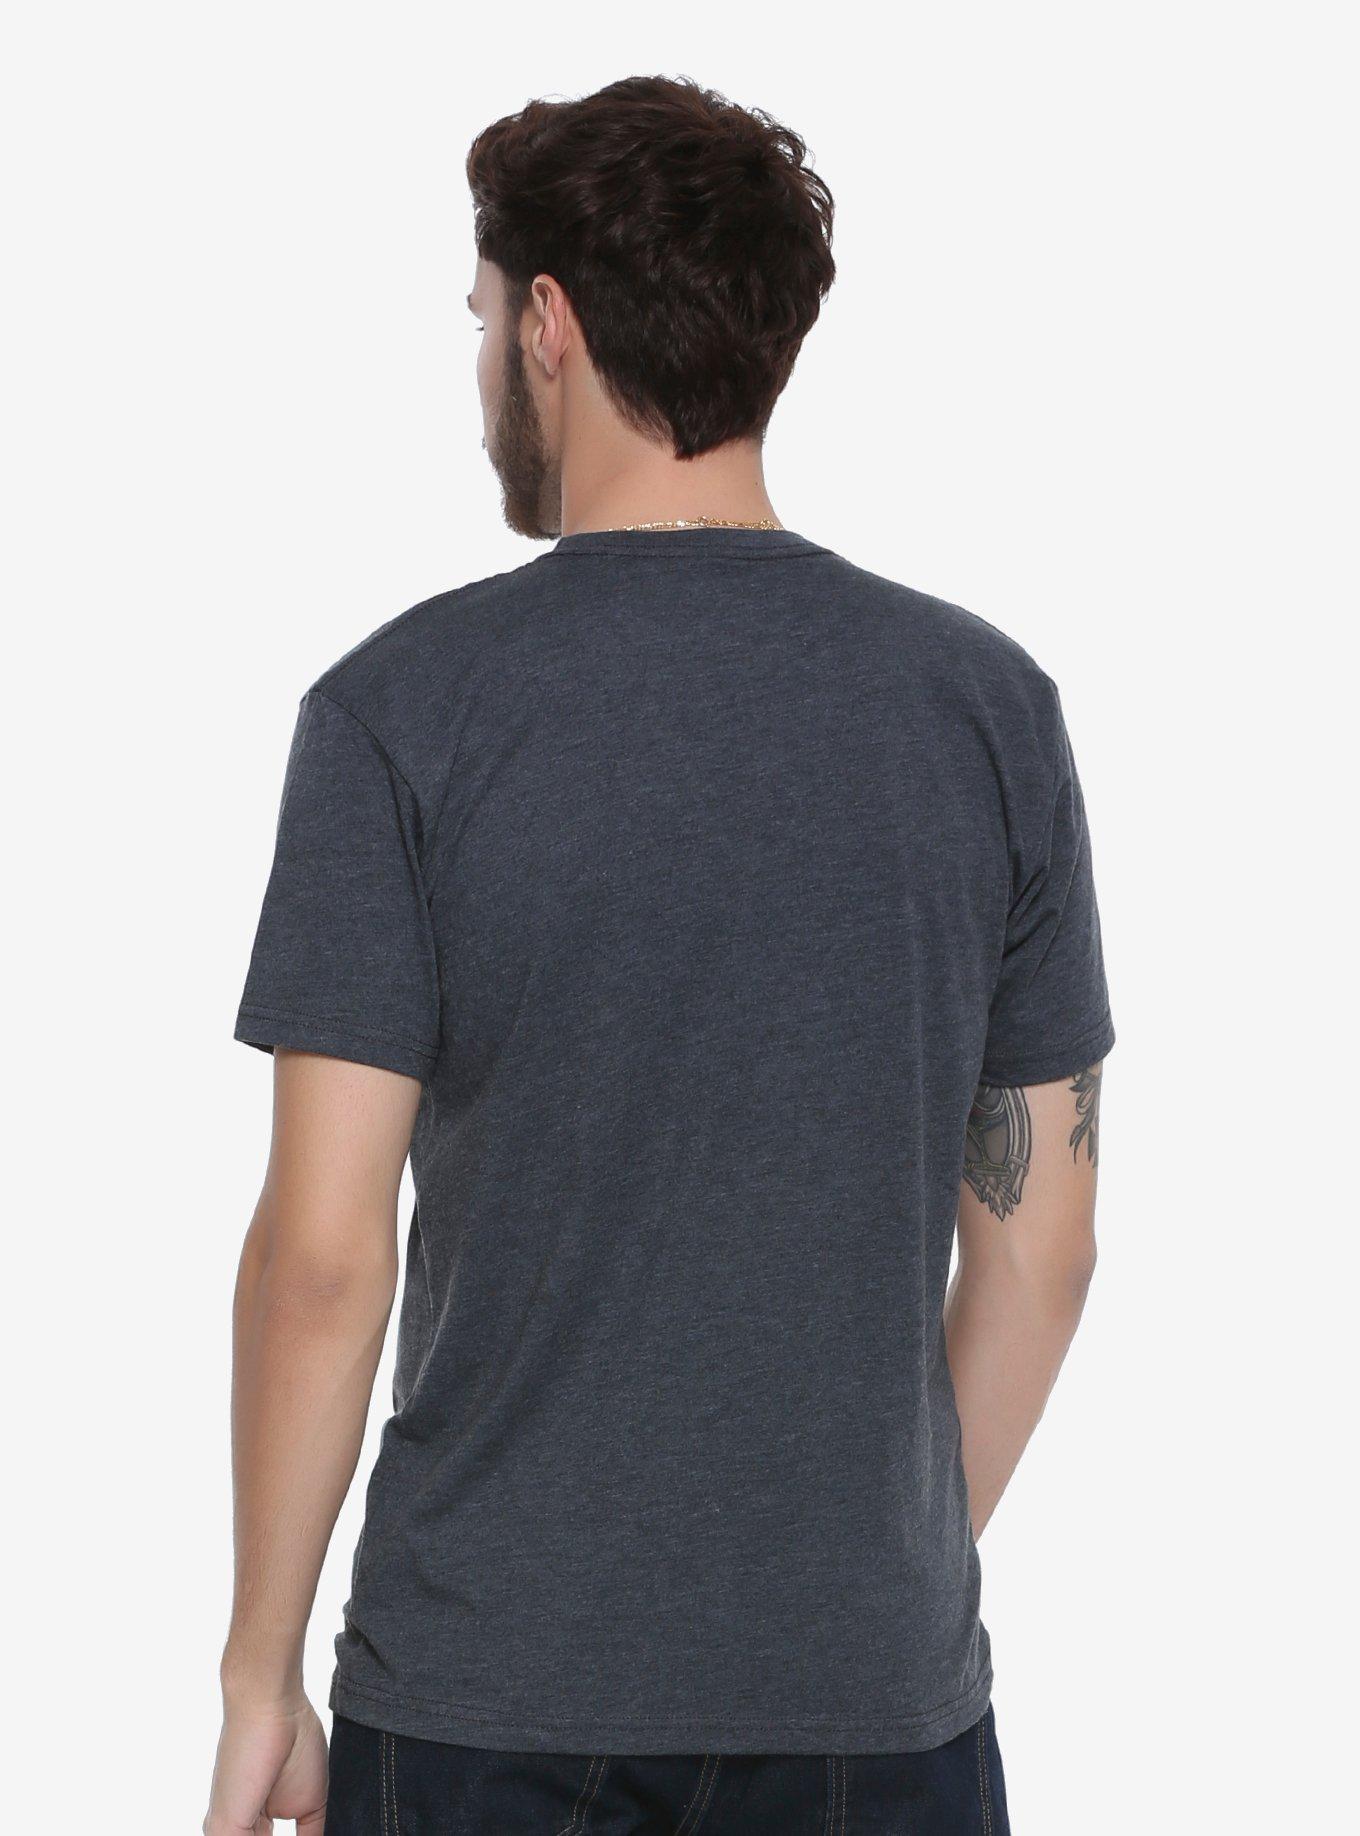 Westworld Souvenir T-Shirt - BoxLunch Exclusive | BoxLunch